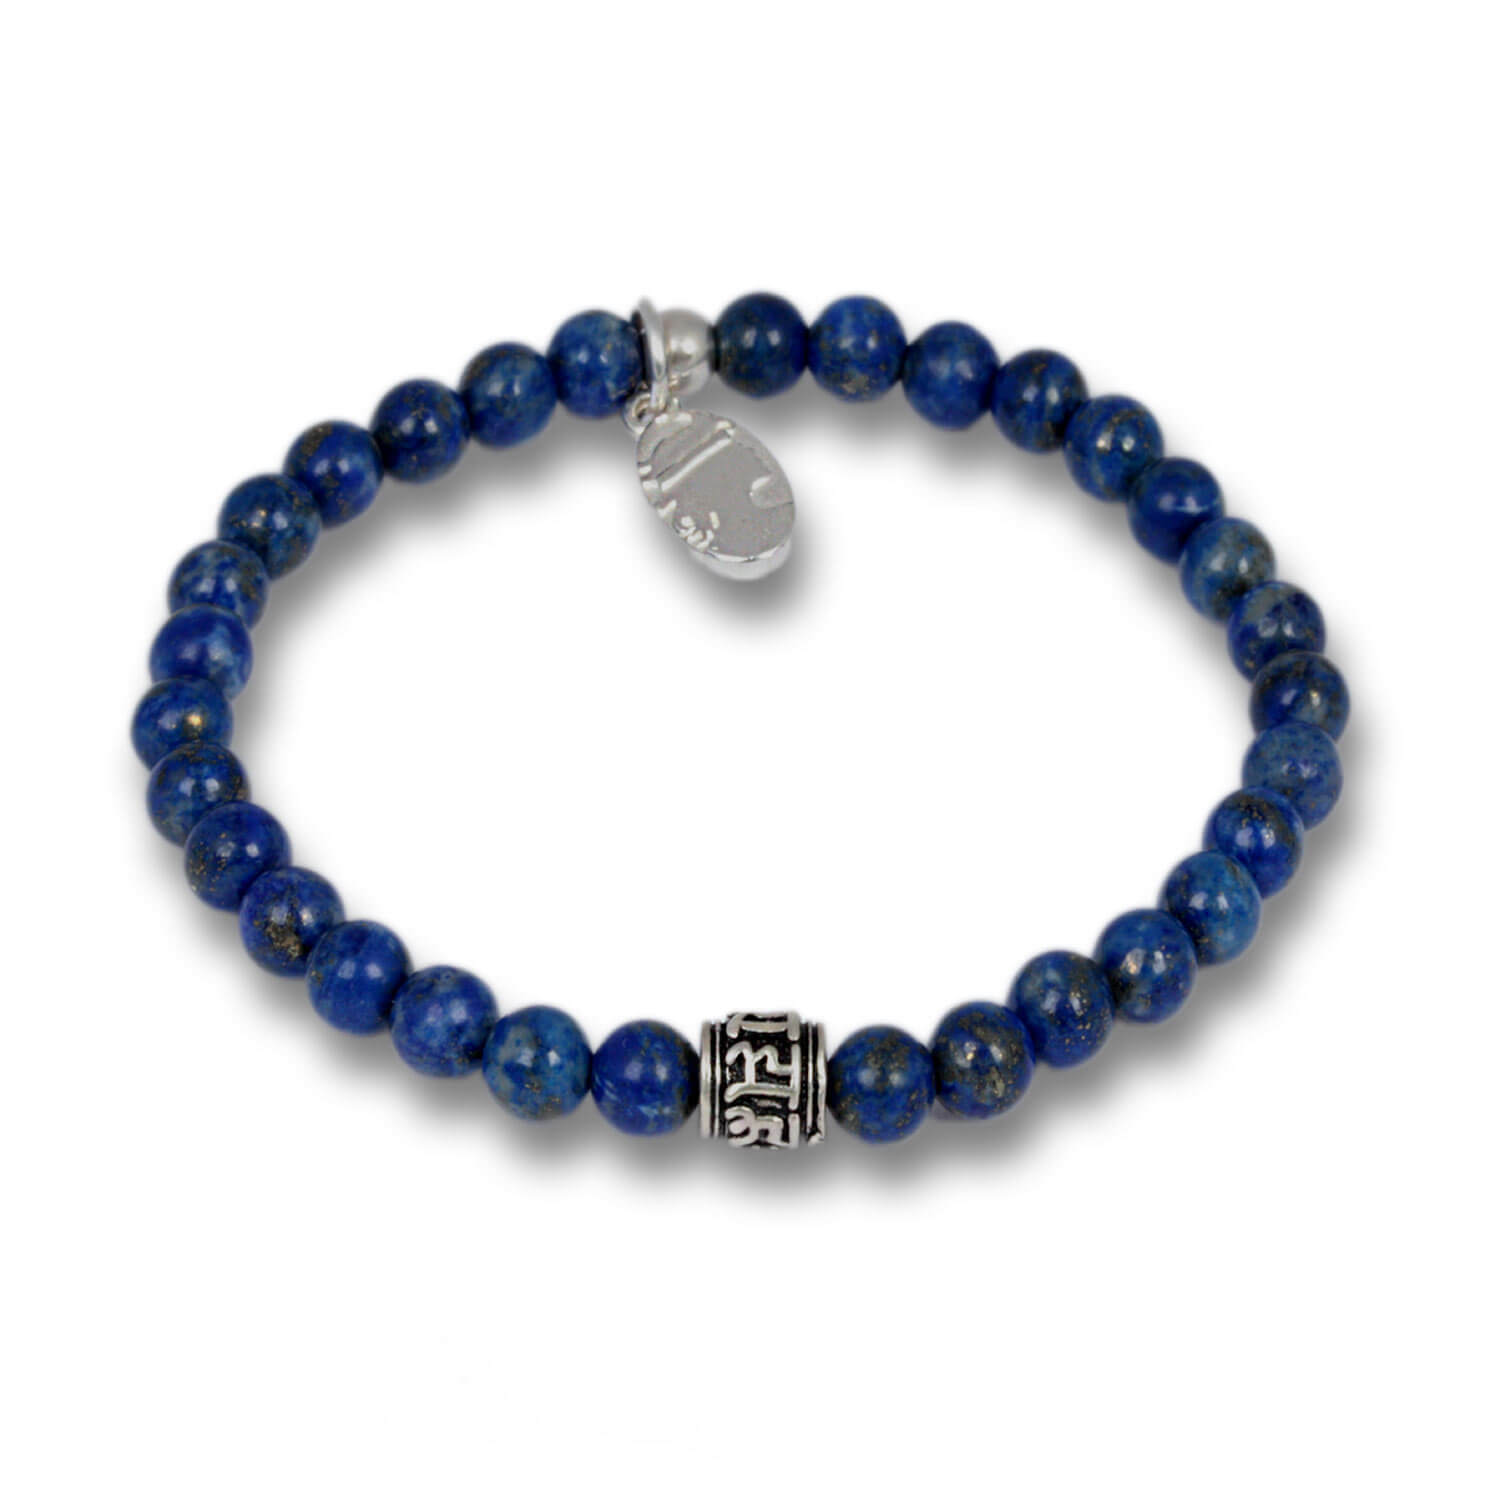 Little Lapislazuli - Mantra Beads gemstone bracelet for men with sterling silver, 6 mm